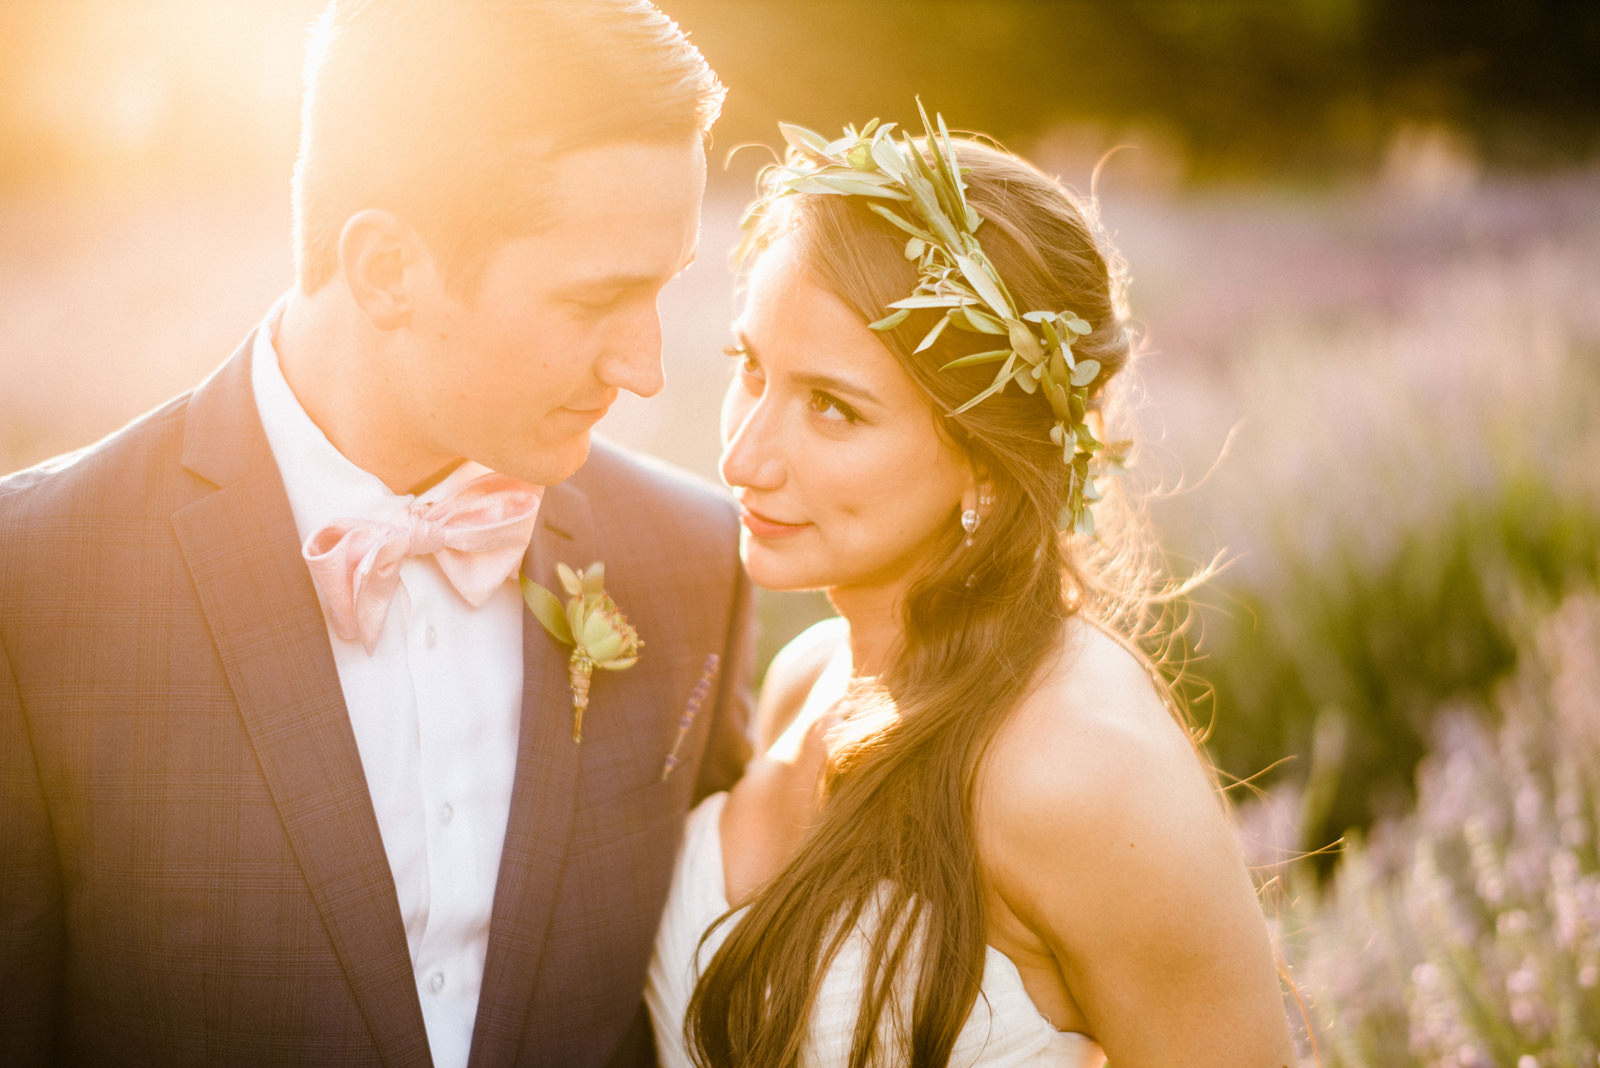 097-woodinville-lavendar-farm-wedding-with-golden-glowy-photos.jpg